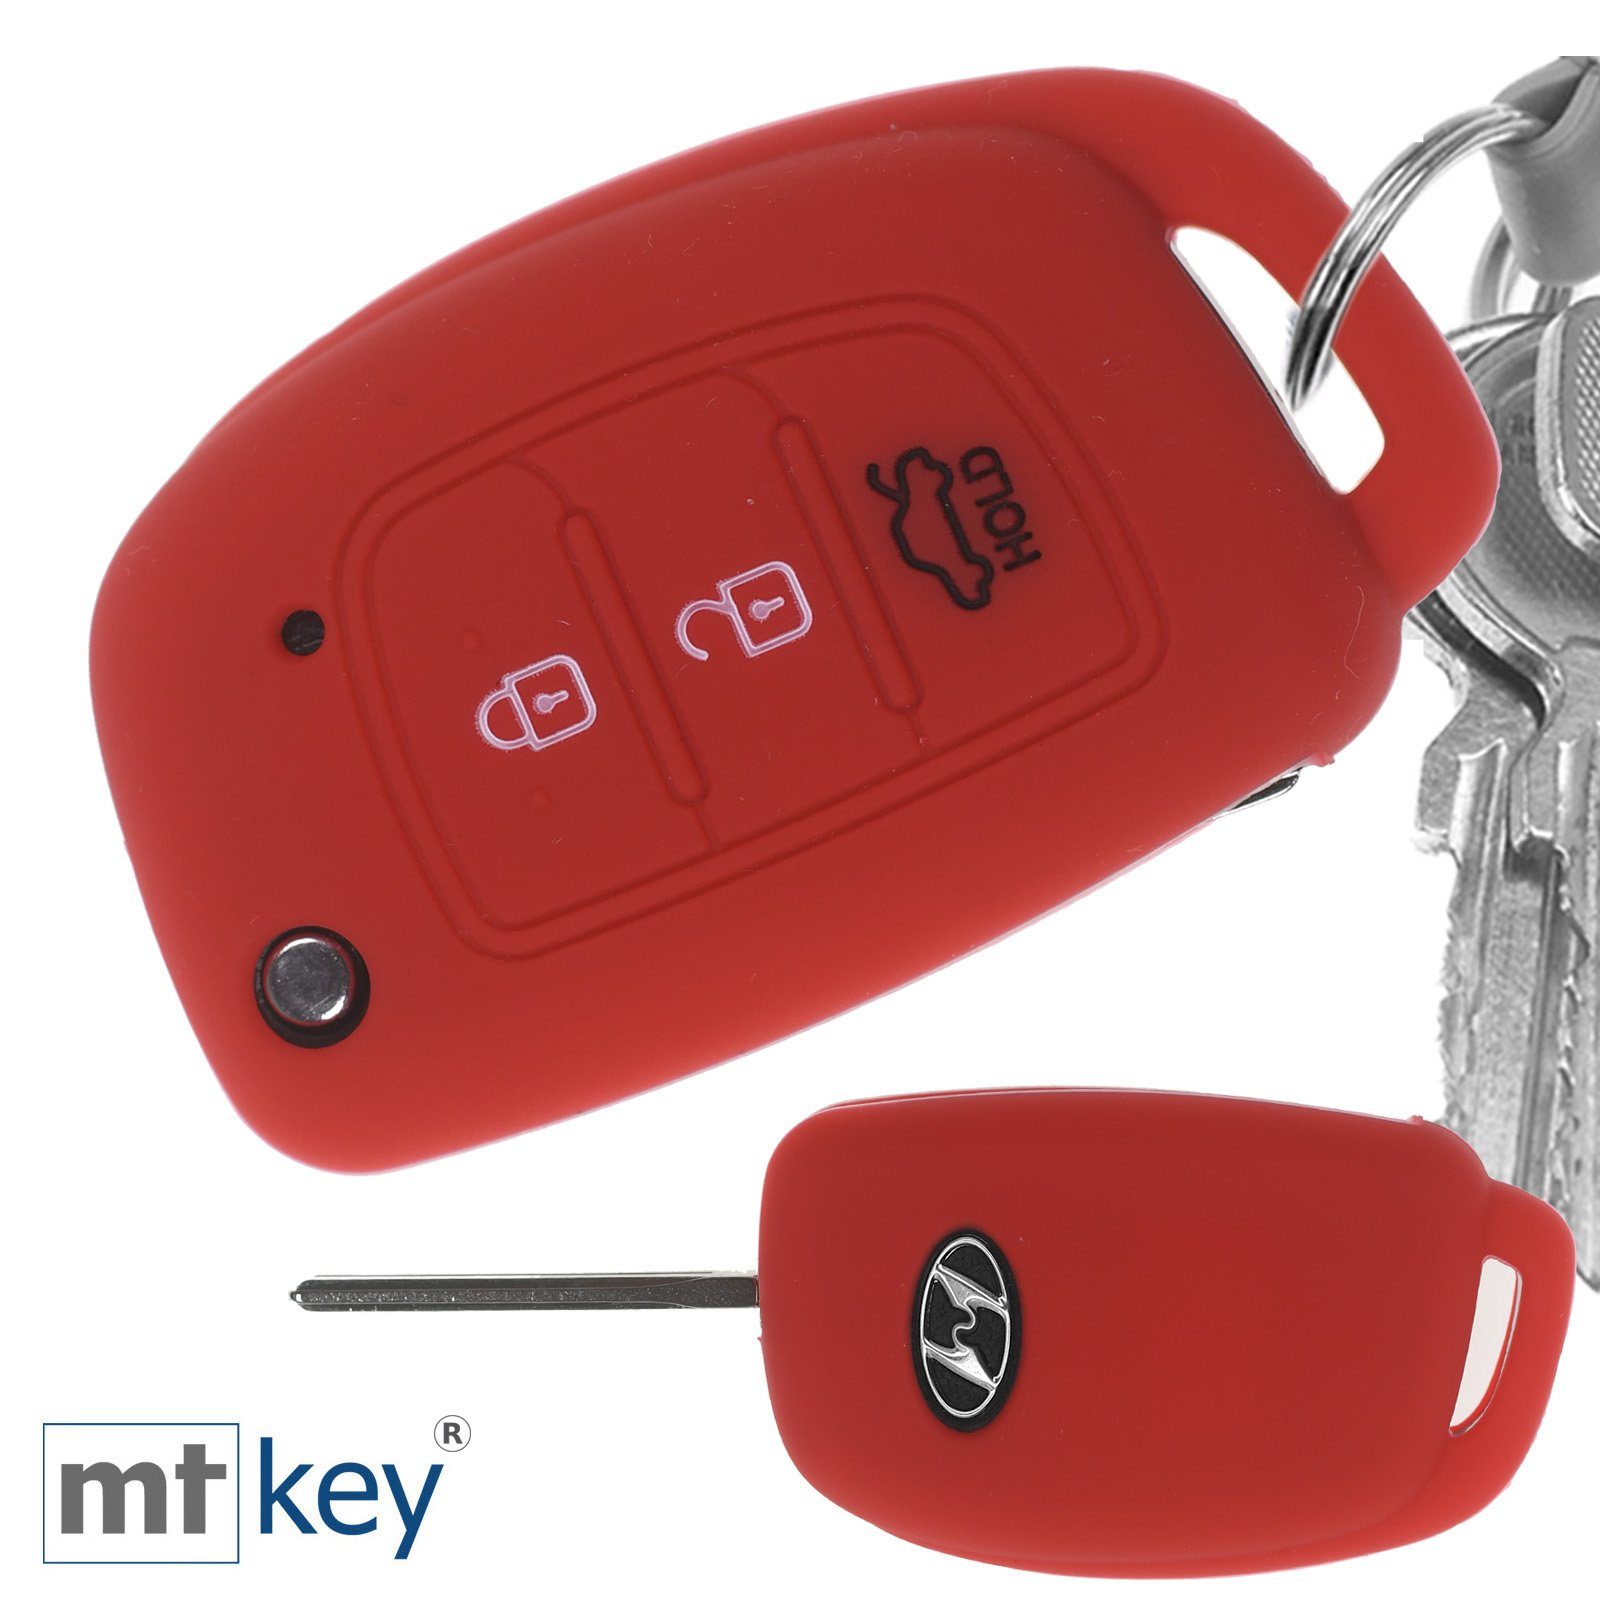 mt-key Schlüsseltasche Autoschlüssel Silikon für im Rot Accent ix35 Design Wabe Schutzhülle i20 ix25 Knopf i10 Tucson Schlüsselband, 3 Hyundai i40 mit Klappschlüssel